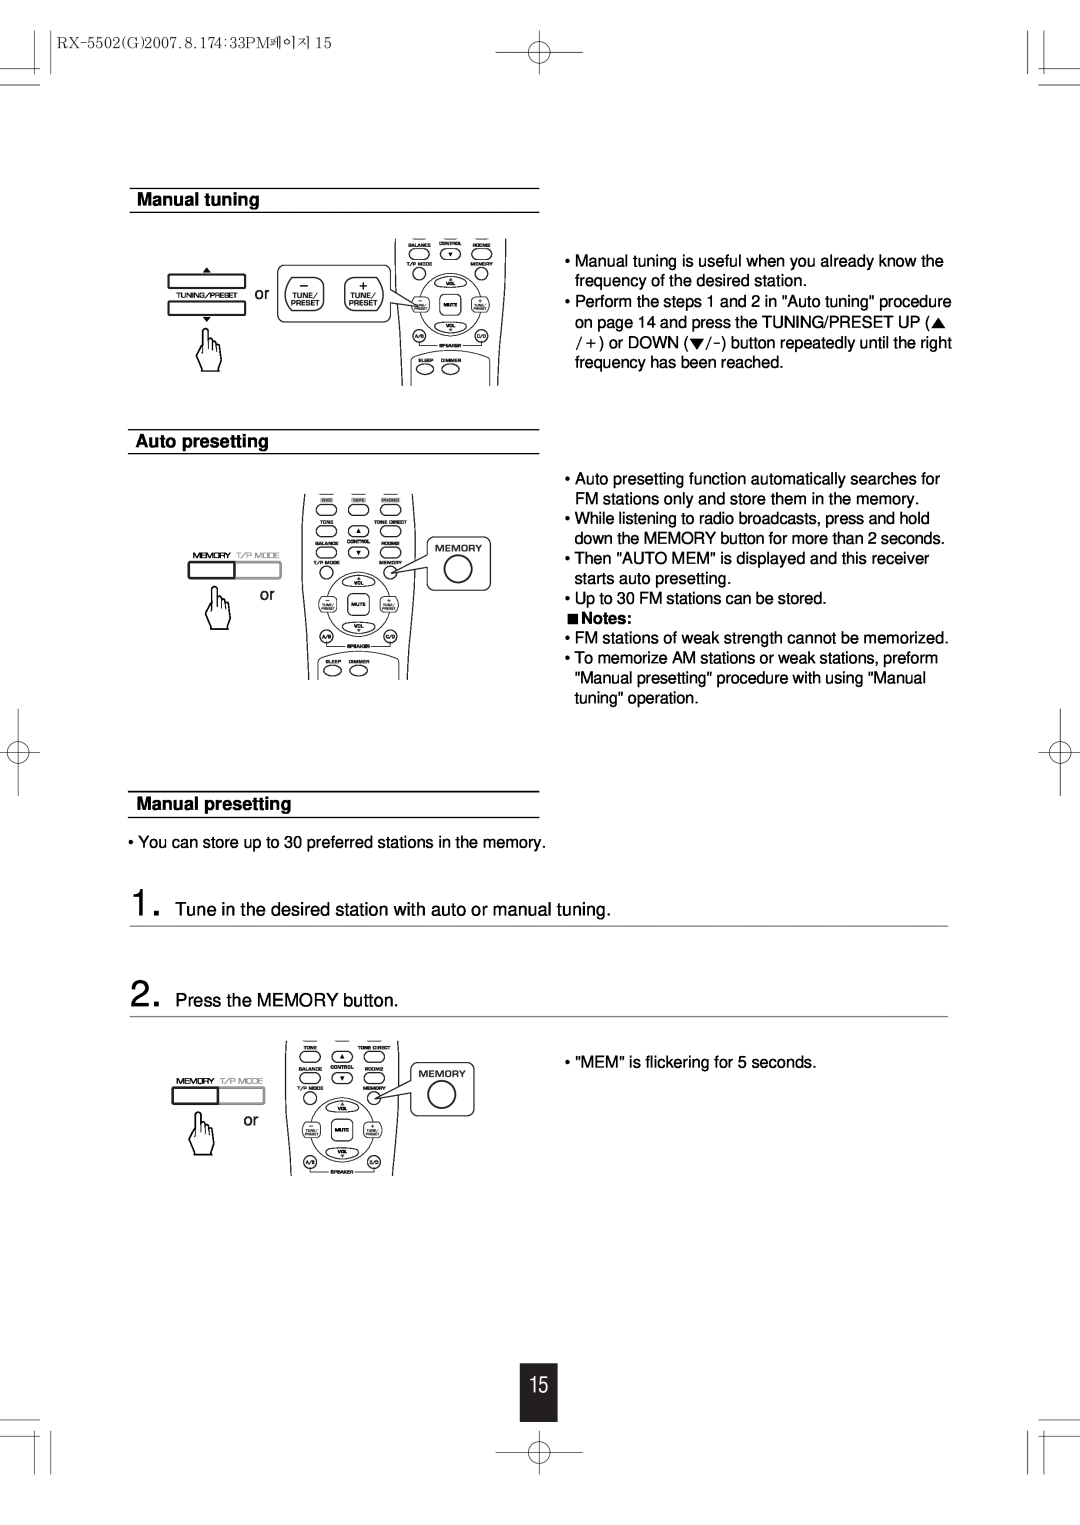 Sherwood RX-5502 manual Manual tuning Auto presetting, Manual presetting, Press the MEMORY button 